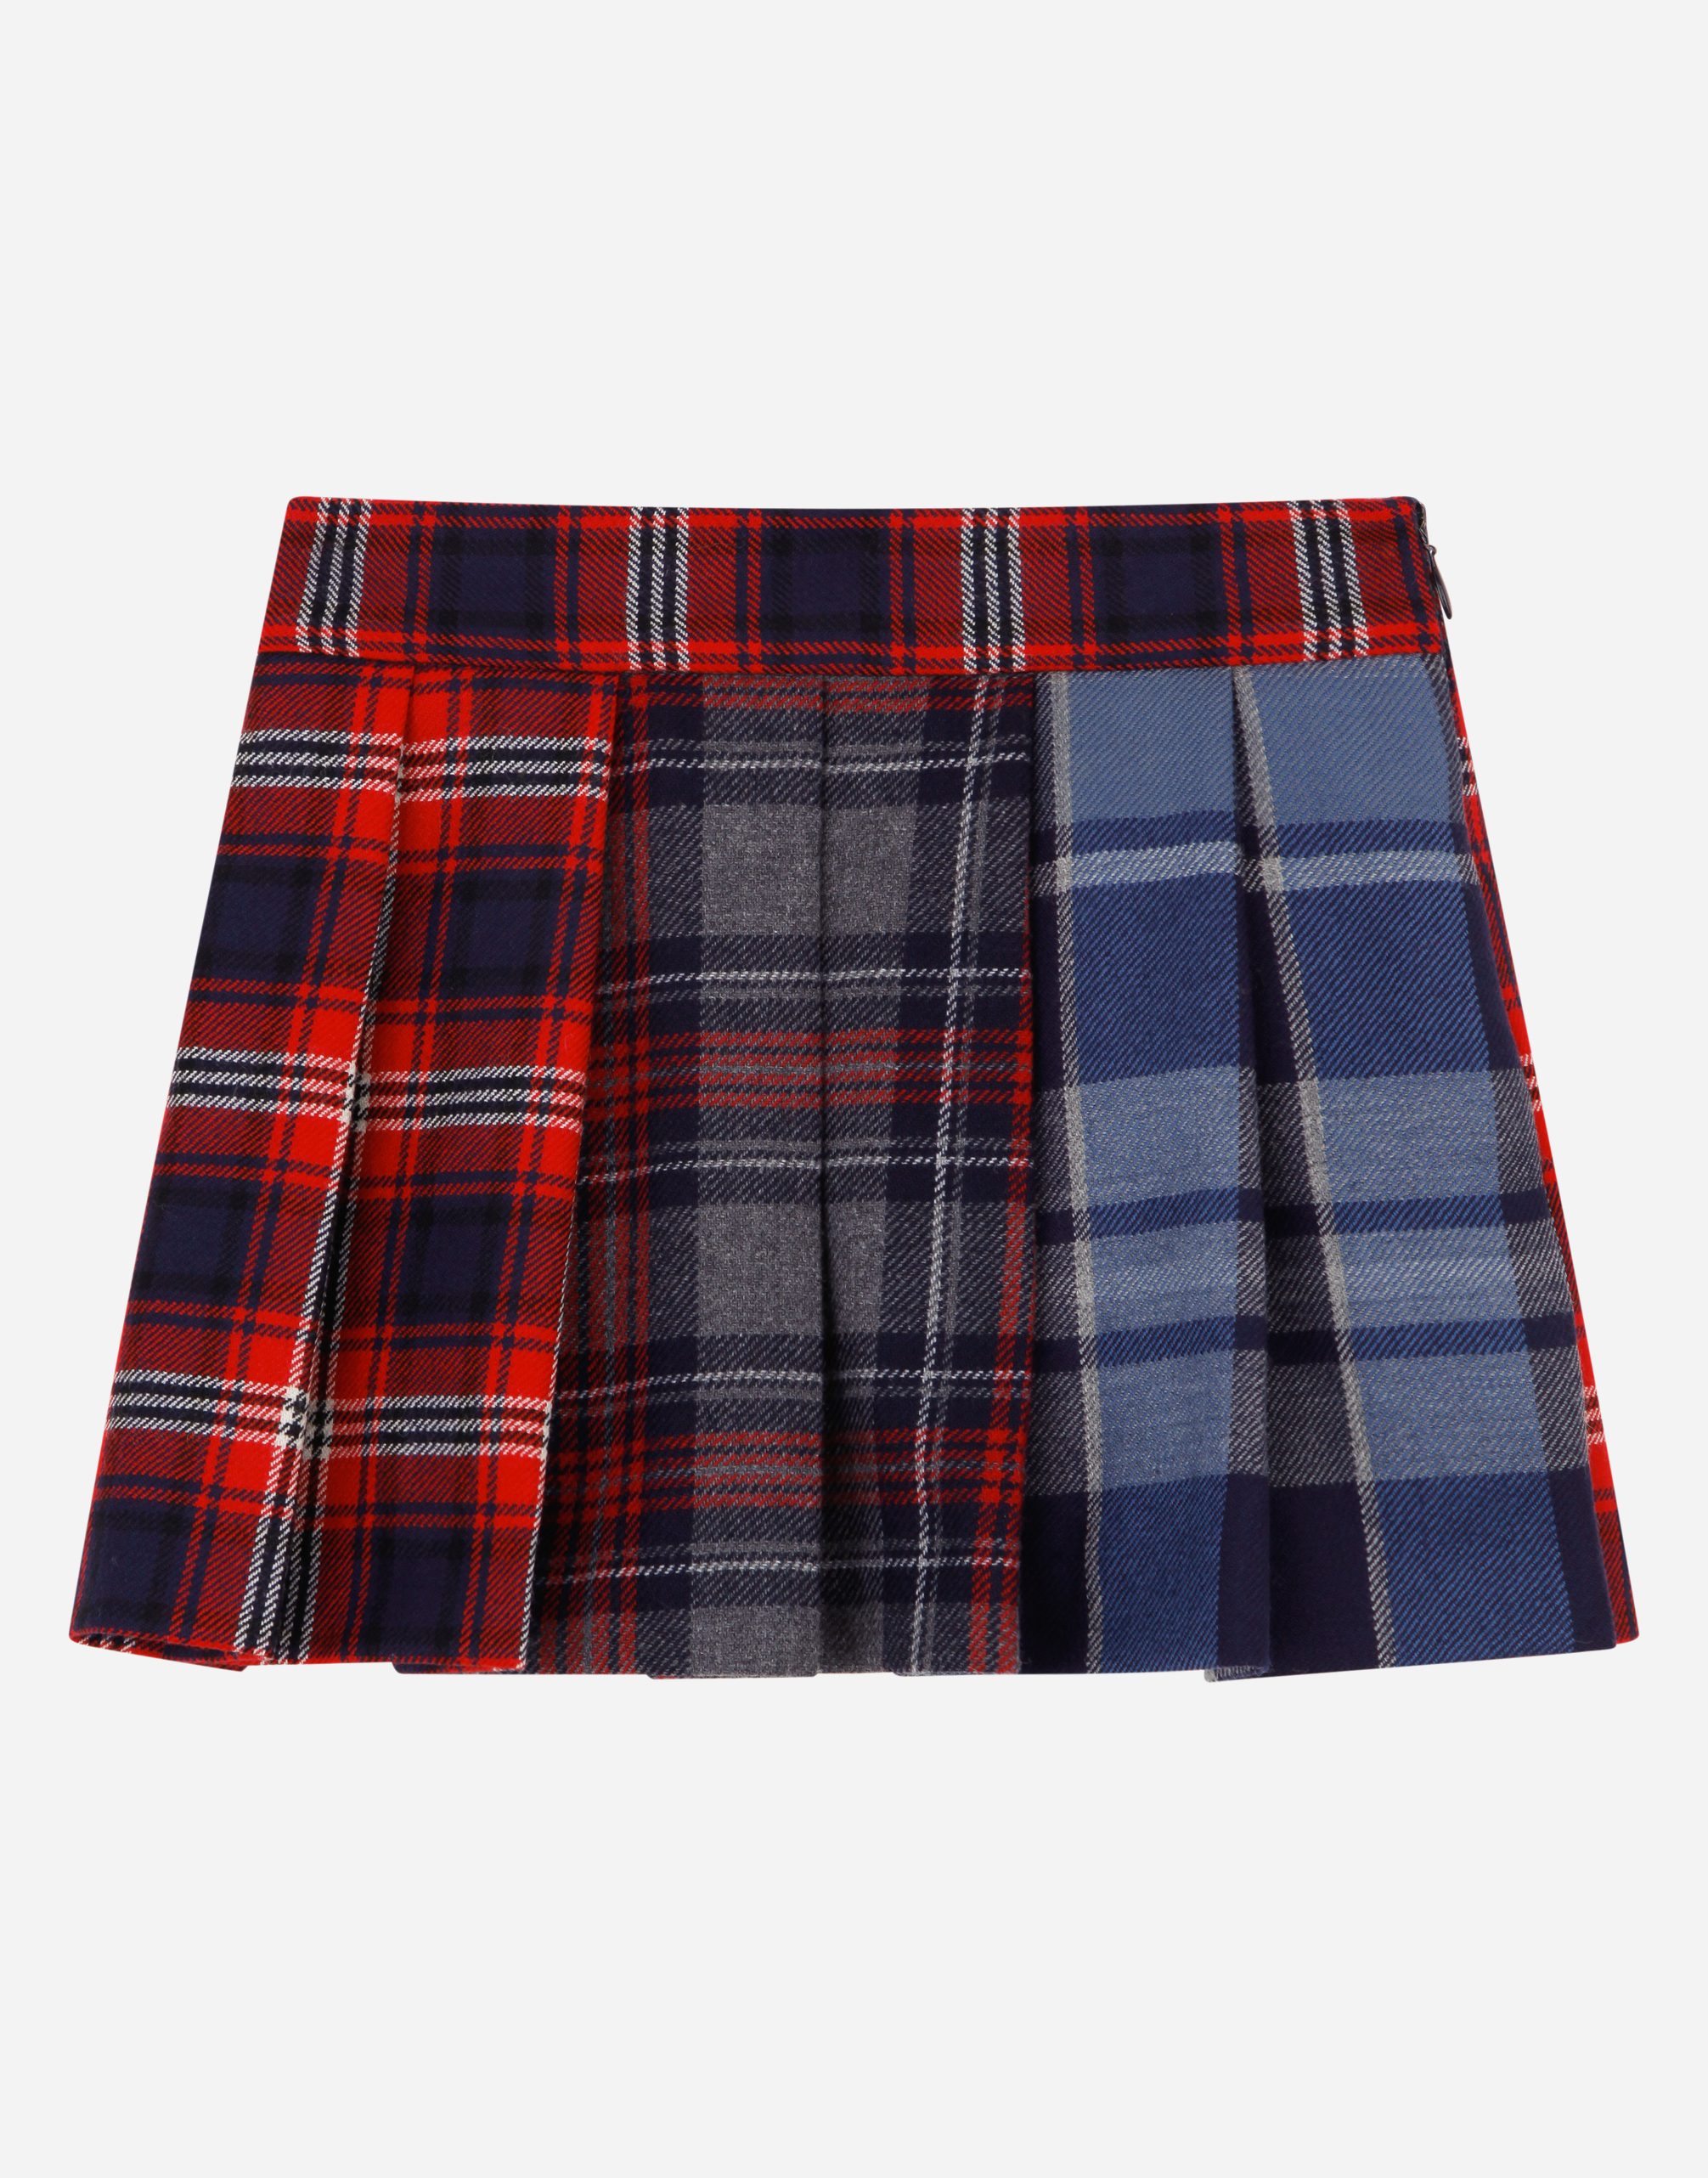 Short pleated mixed tartan skirt in Multicolor